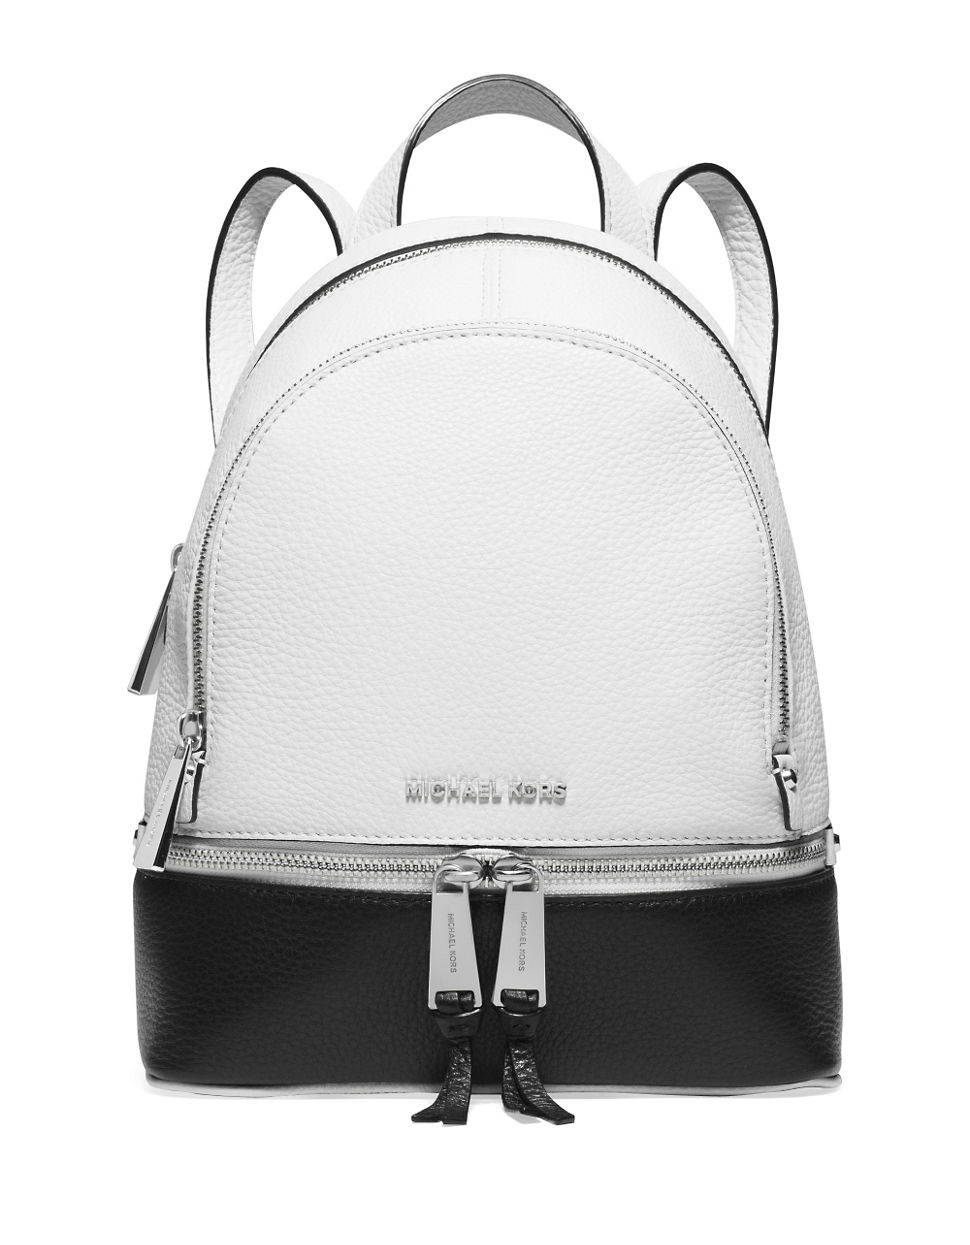 michael kors backpack black and white